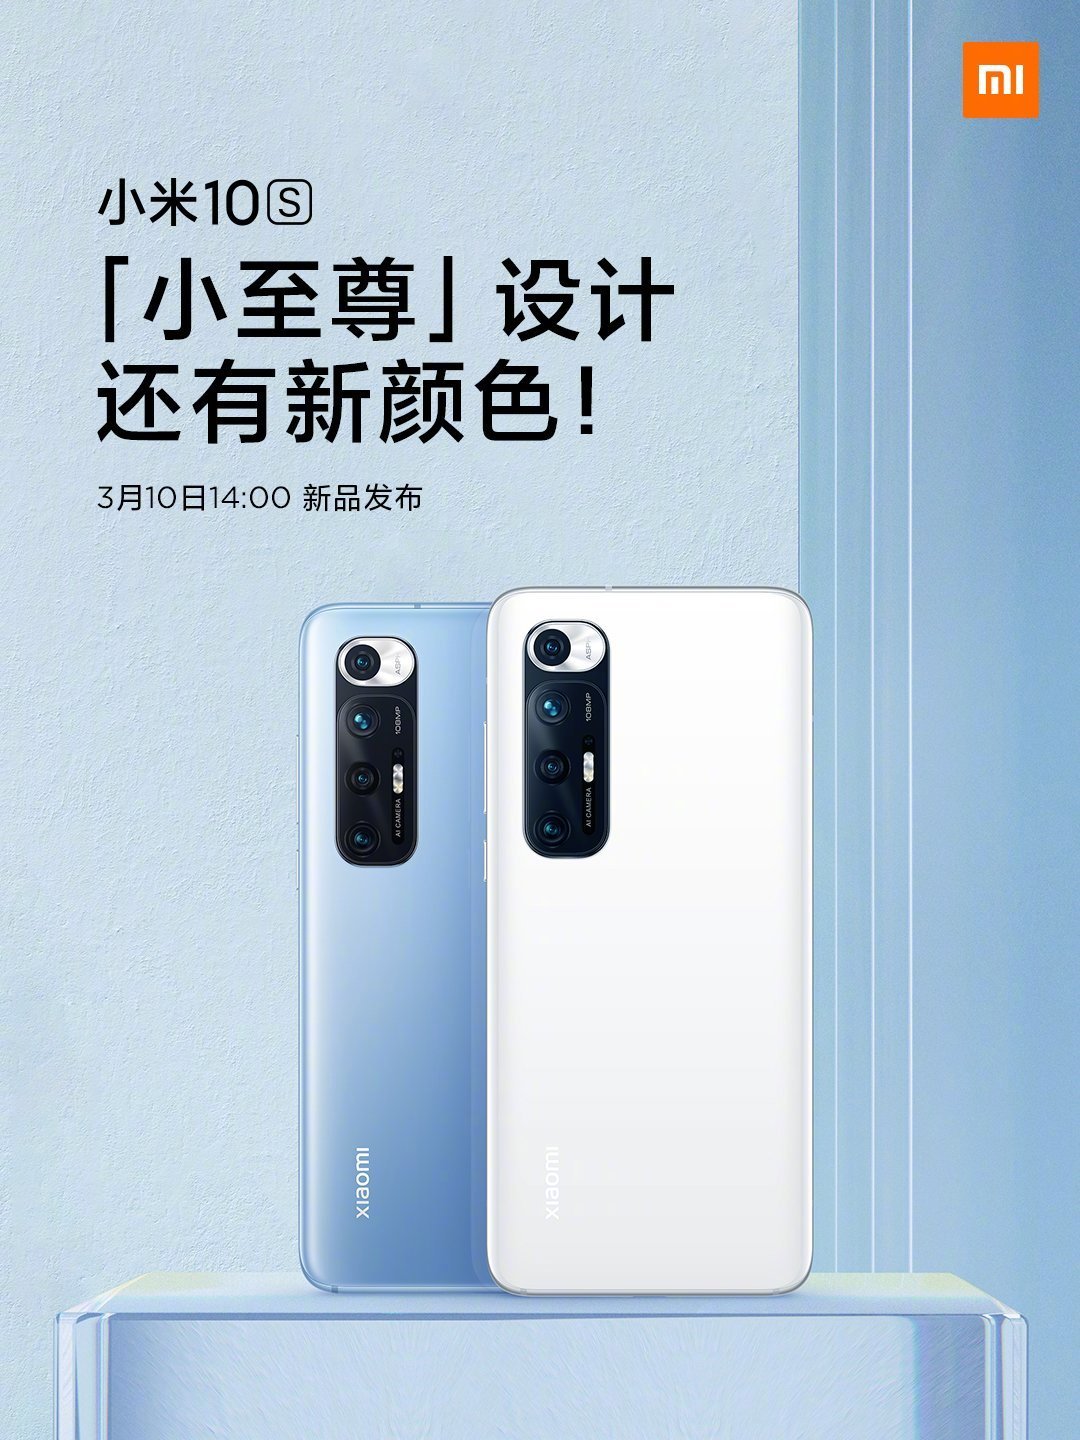 Xiaomi Mi 10S taariikhda bilaabista -